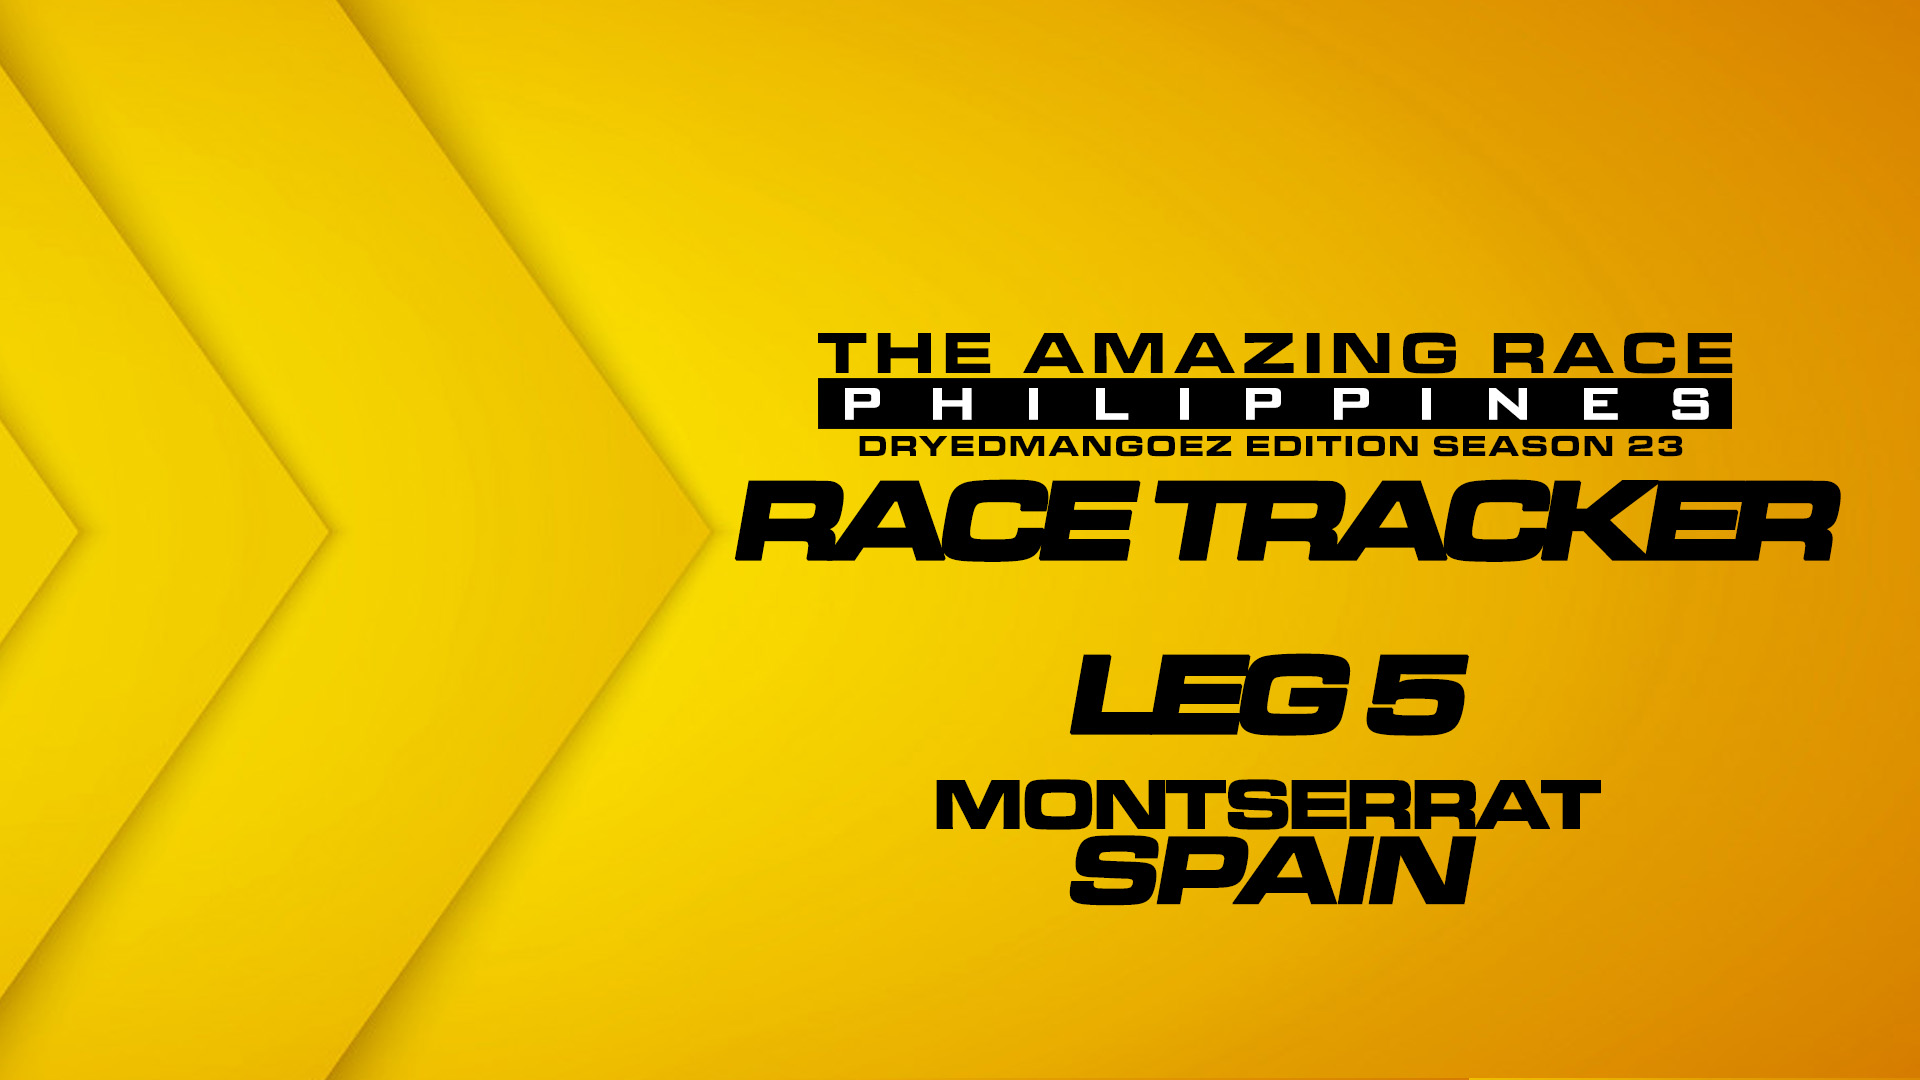 The Amazing Race Philippines: DryedMangoez Edition Season 23 Race Tracker – Leg 5